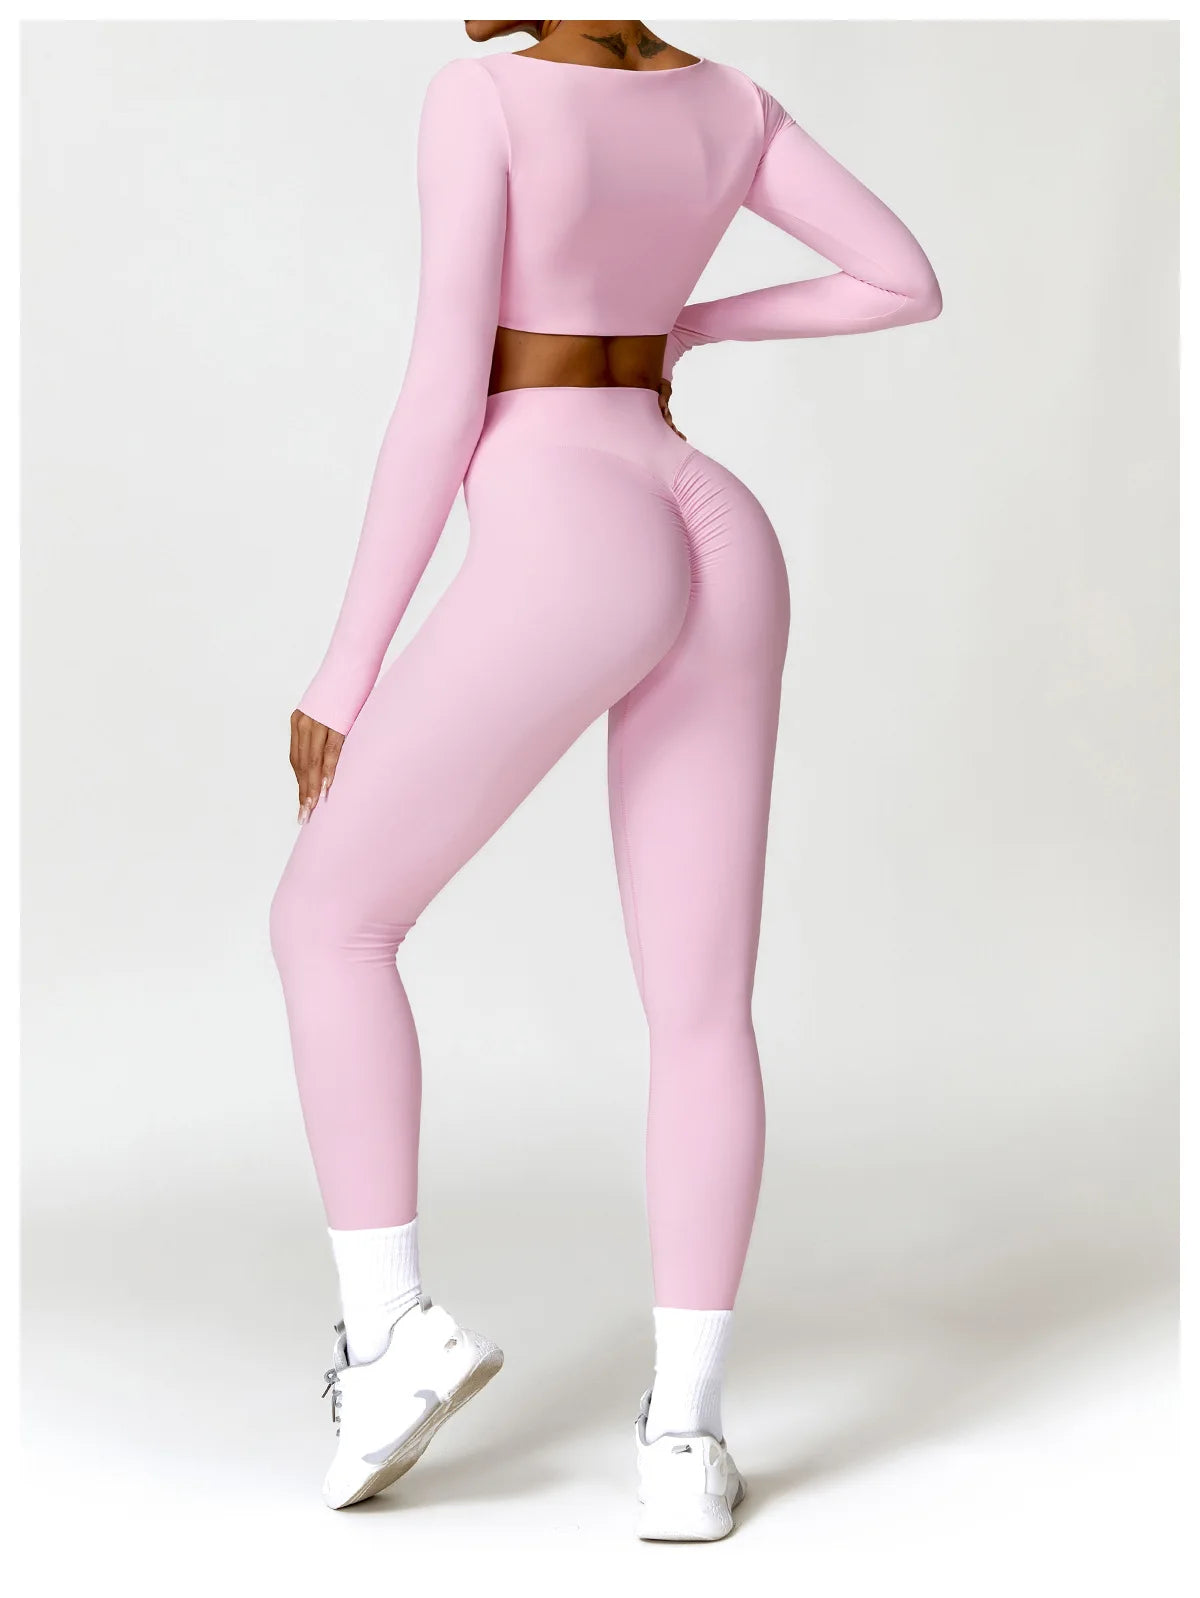 Sensual Pink Sissy Yoga Leggings for Men – Embrace Your Feminine Power! - Sissy Panty Shop